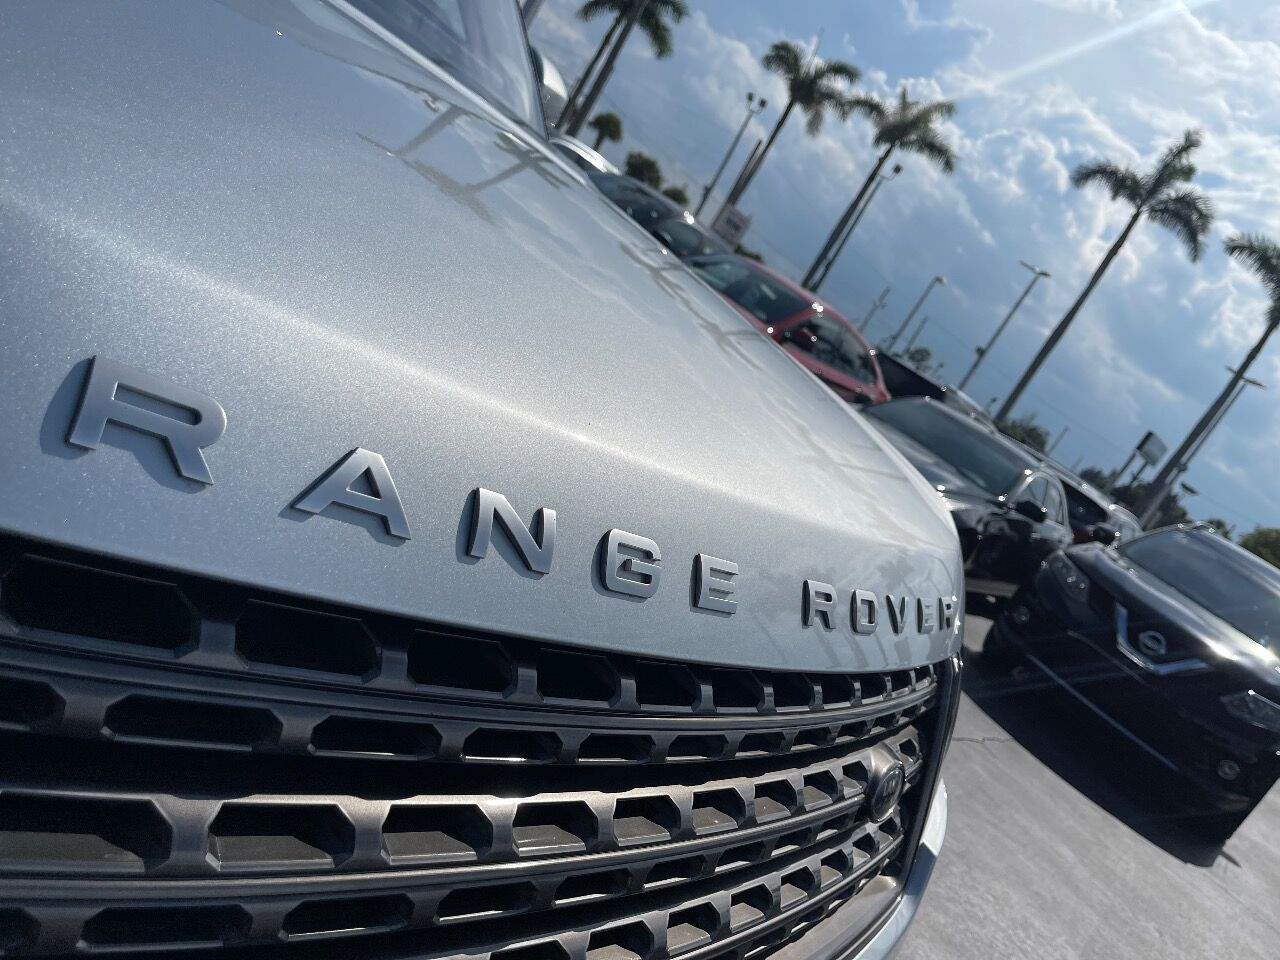 2016 LAND ROVER Range Rover SUV / Crossover - $29,900